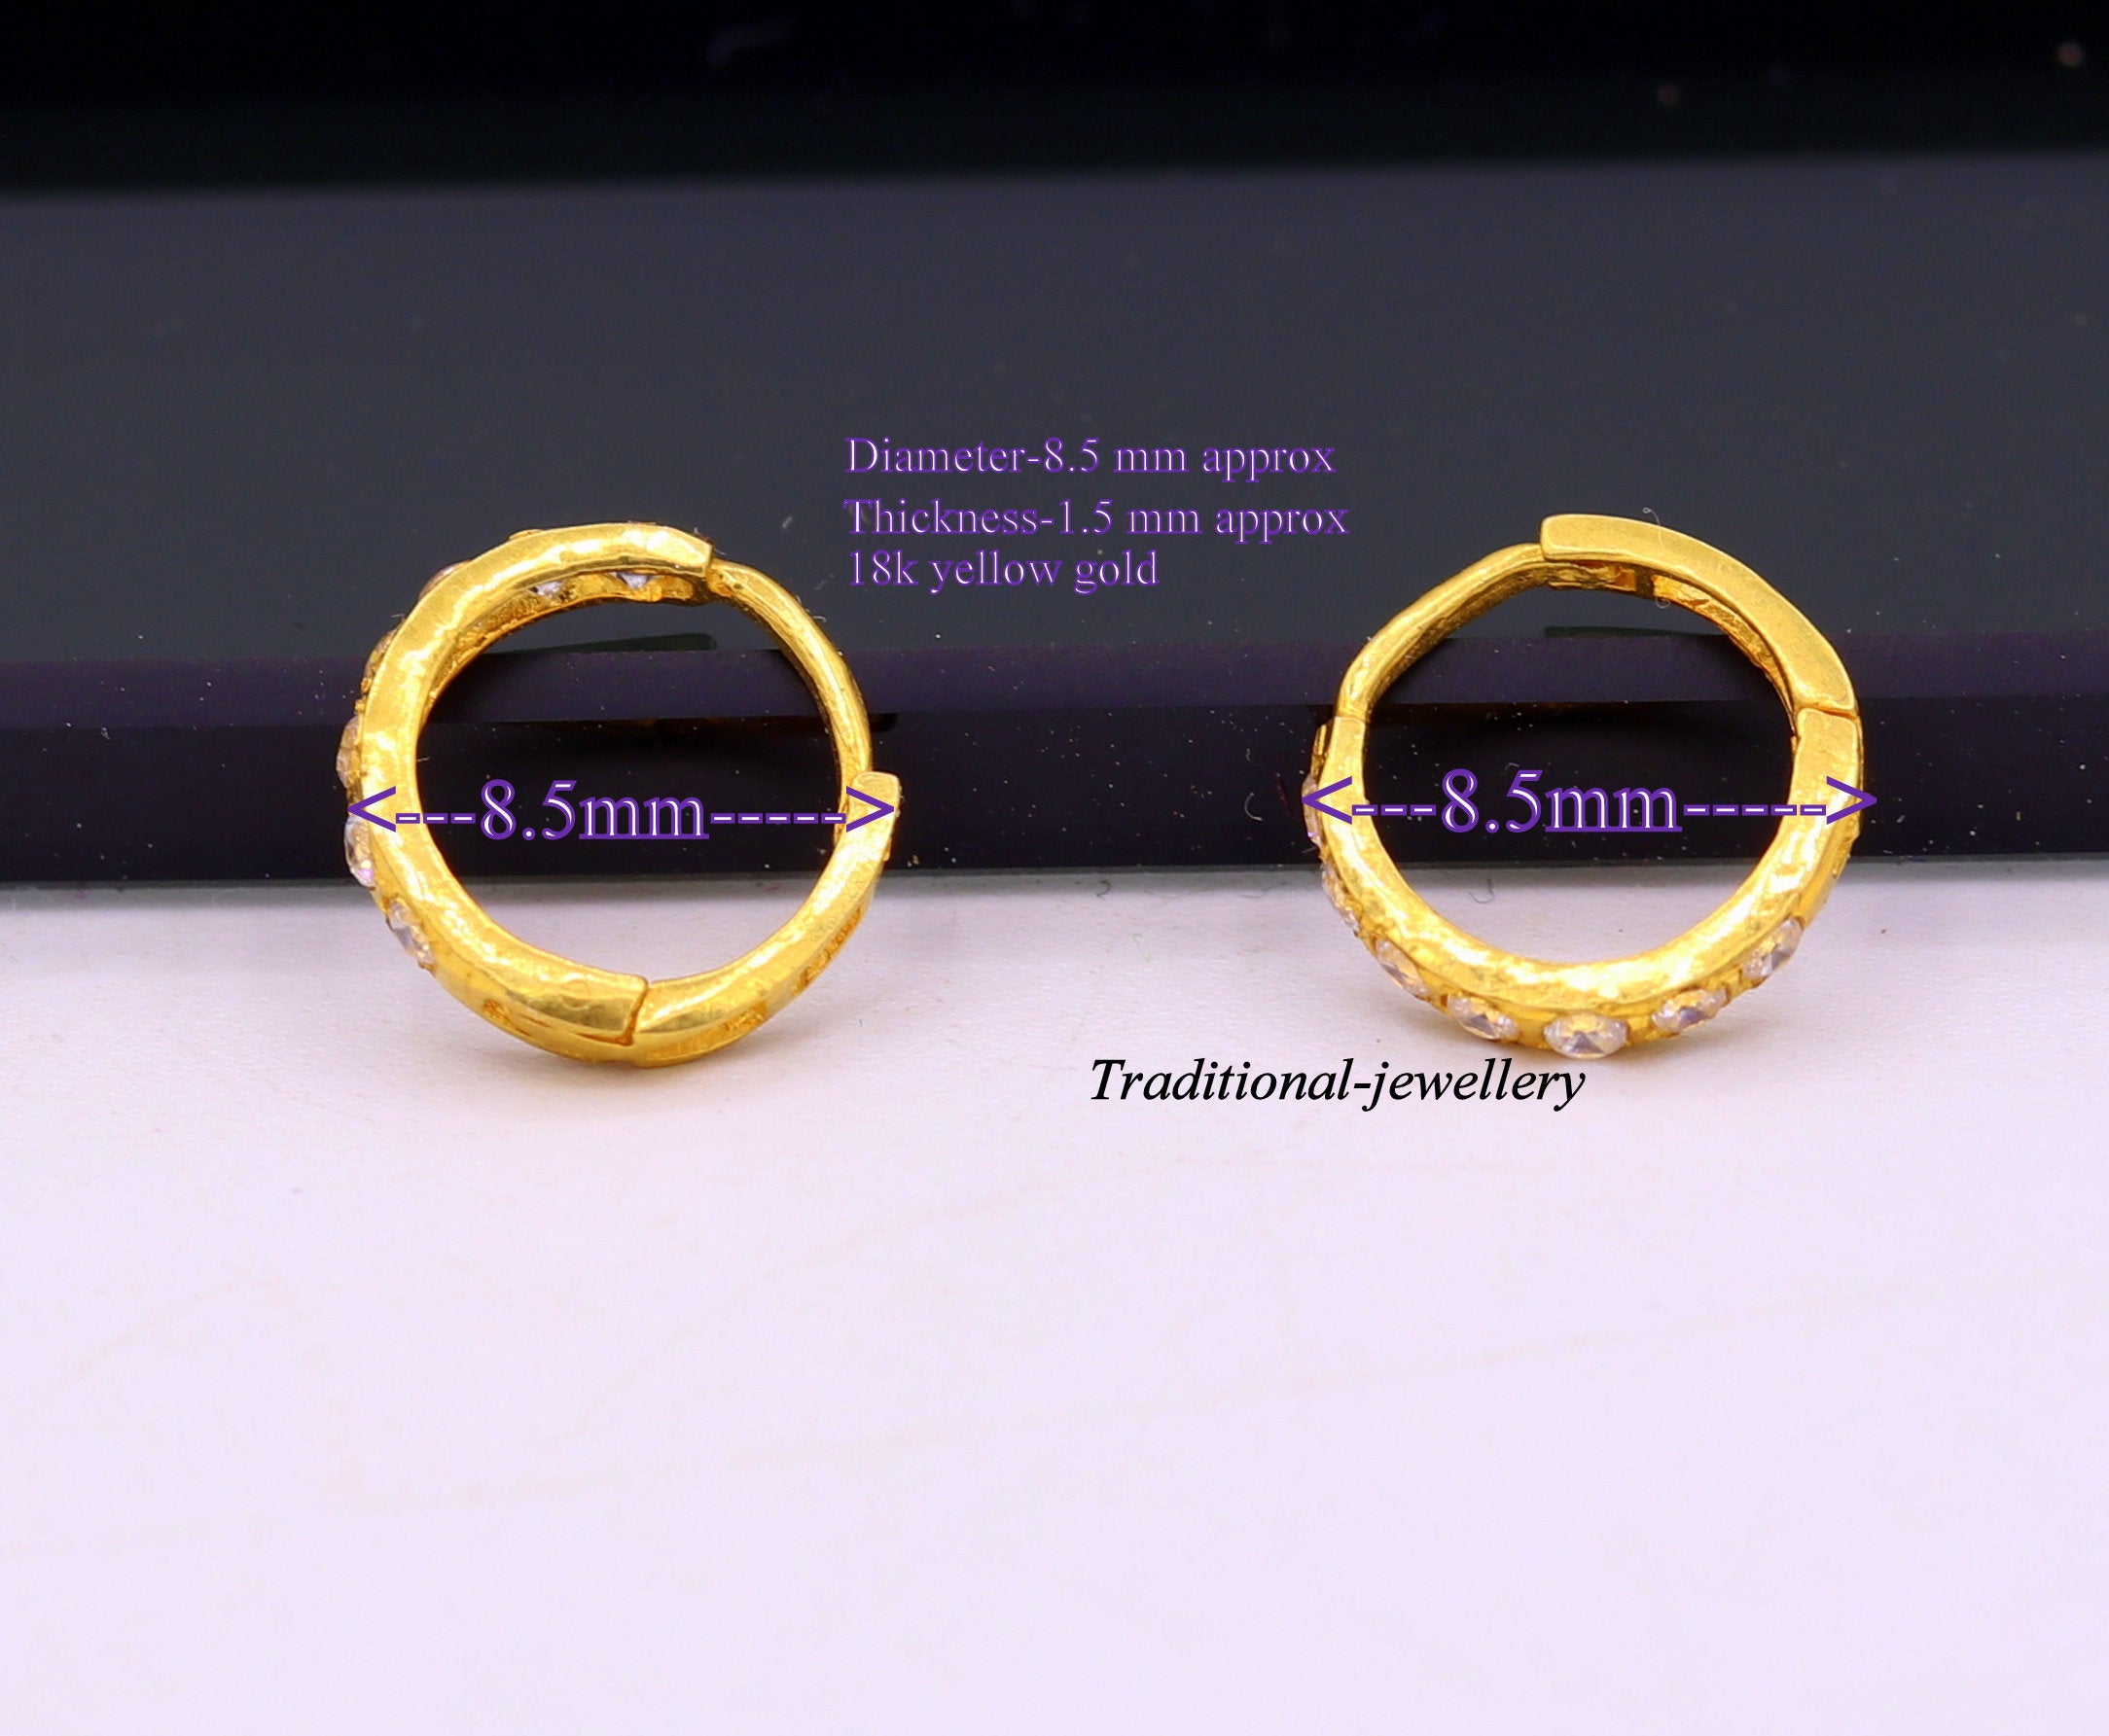 Gold Earrings For Women For Daily Use 2023  परतदन 24 घट पहनन क लए  गलड इयररग डजइन